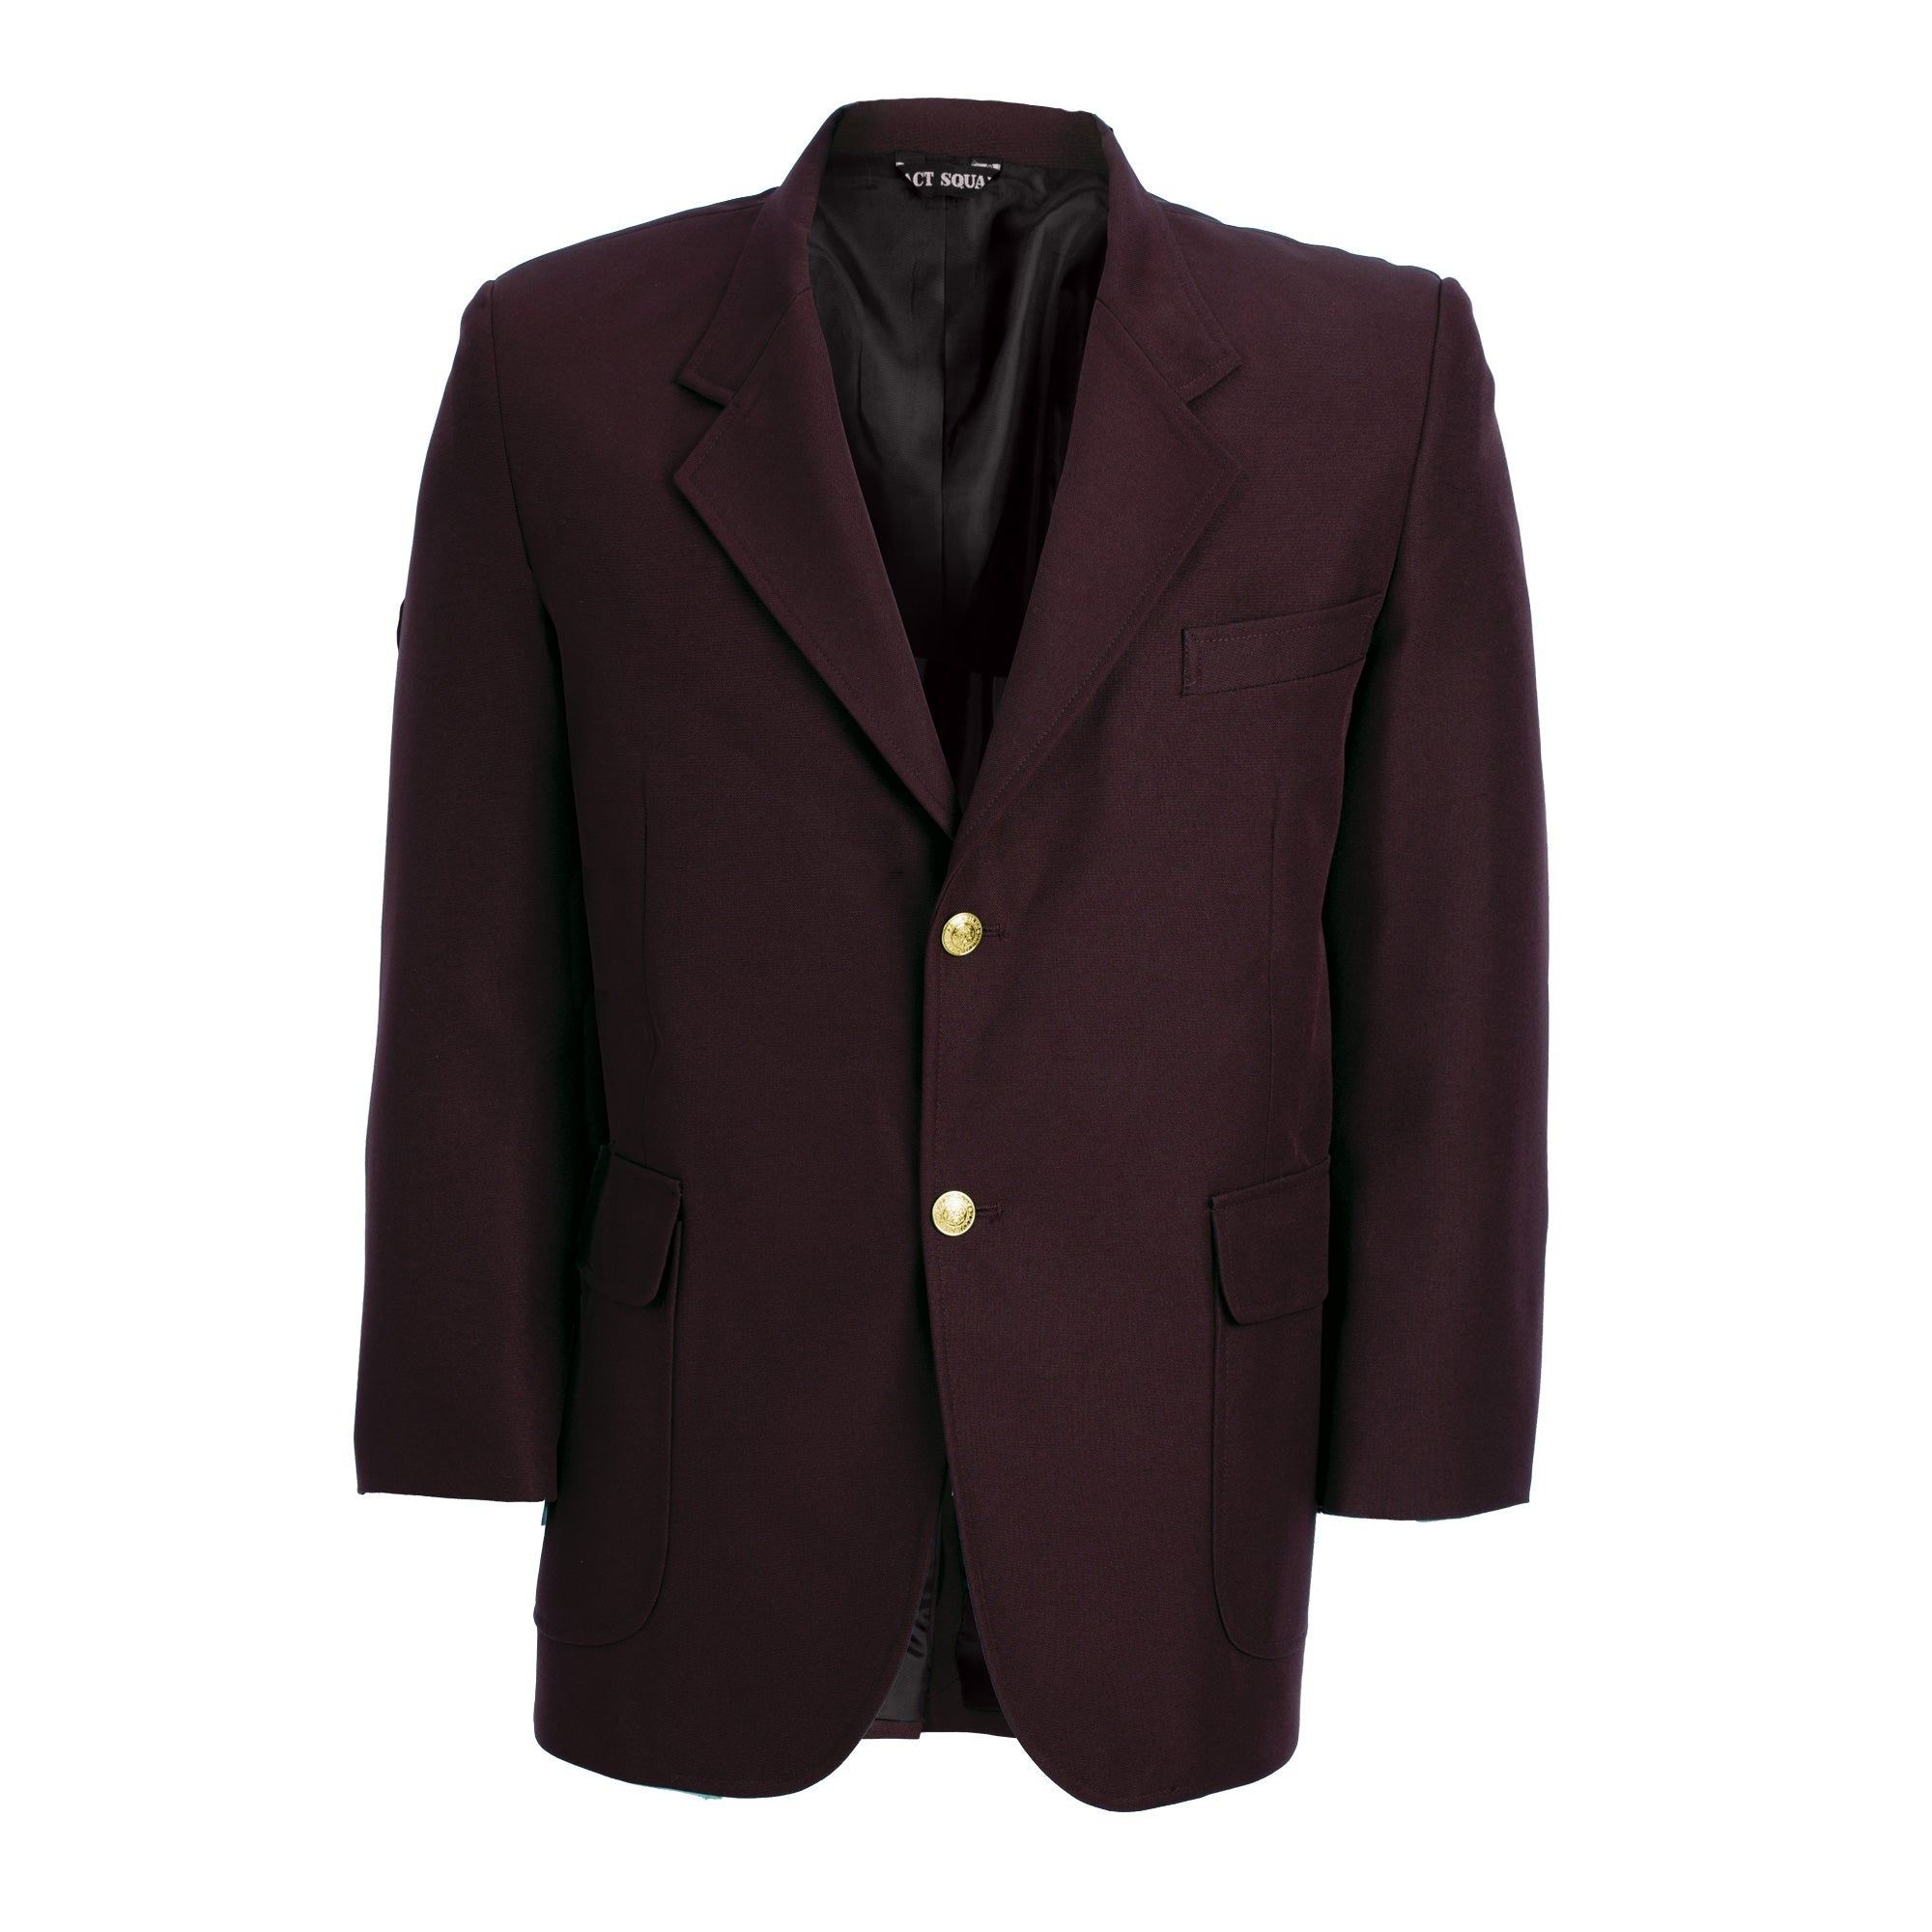 Tact Squad Men’s Textured Woven Uniform Blazer (8000) 2nd Color